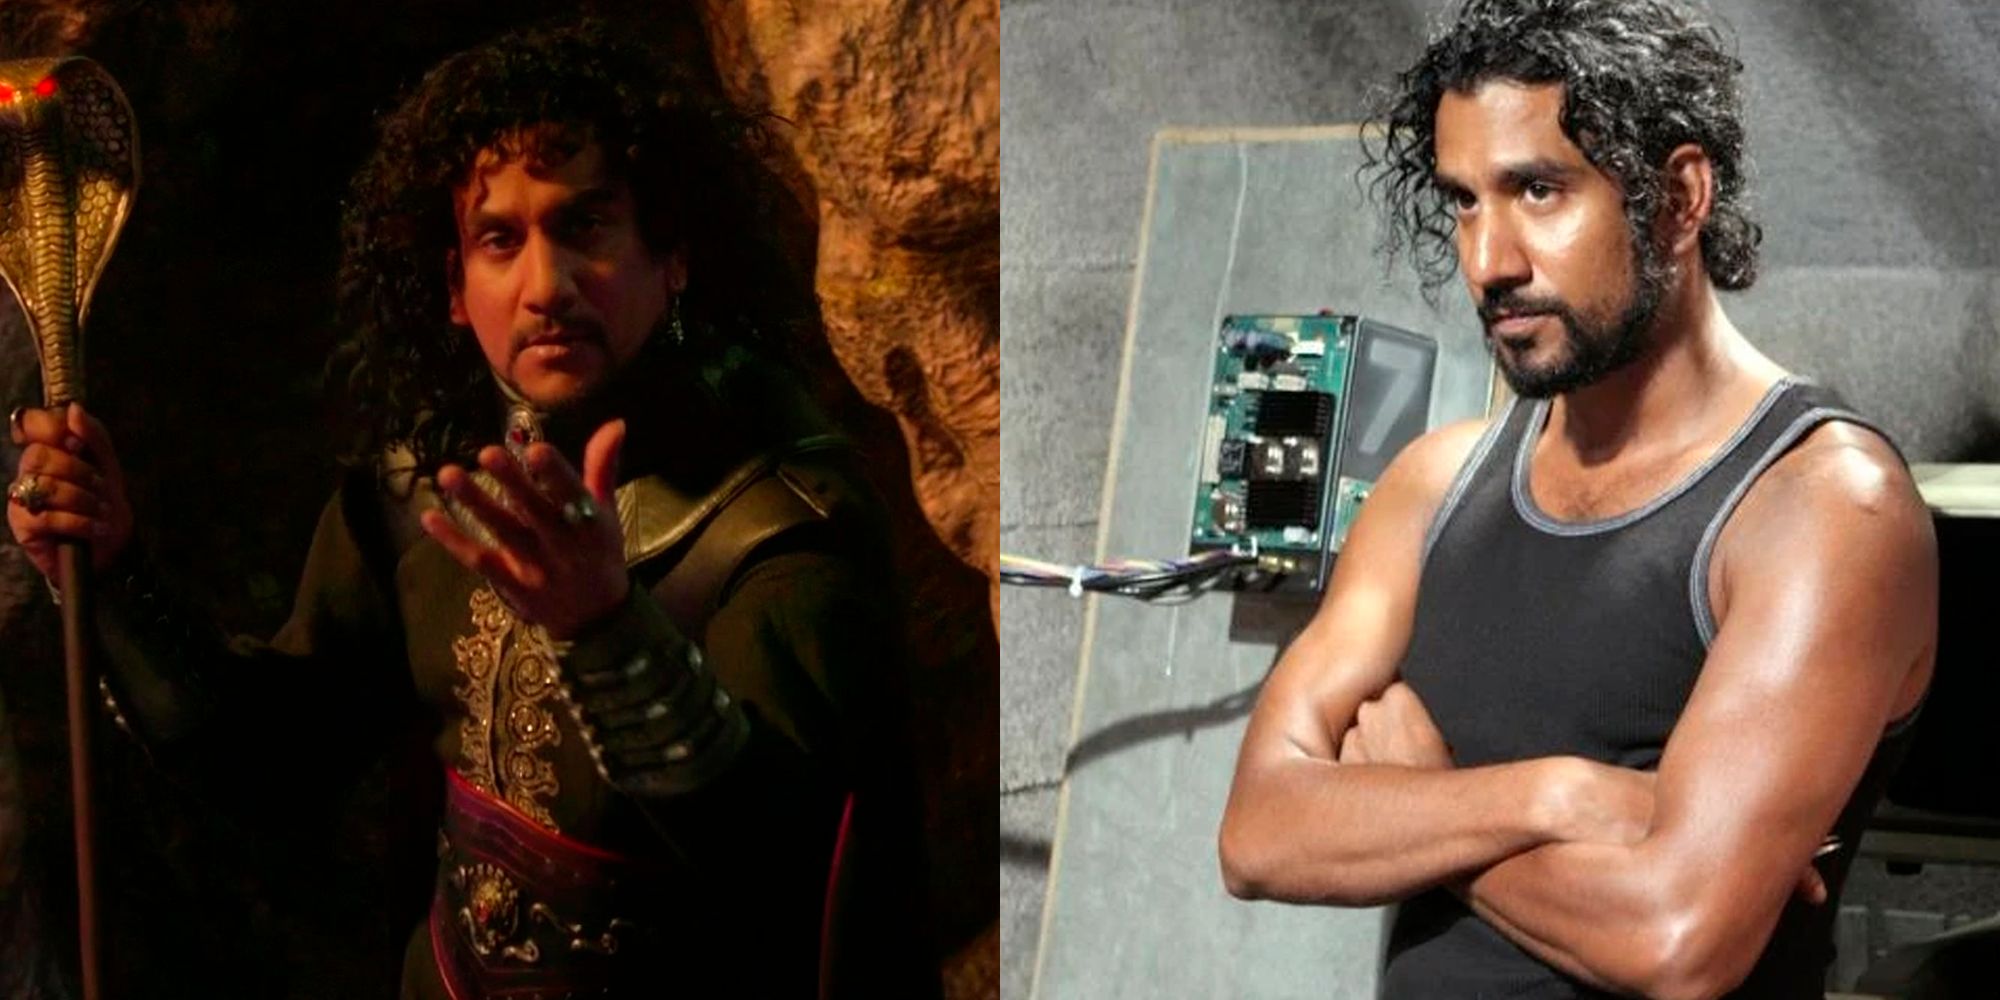 Lost' star Naveen Andrews to star in new 'Wonderland' series